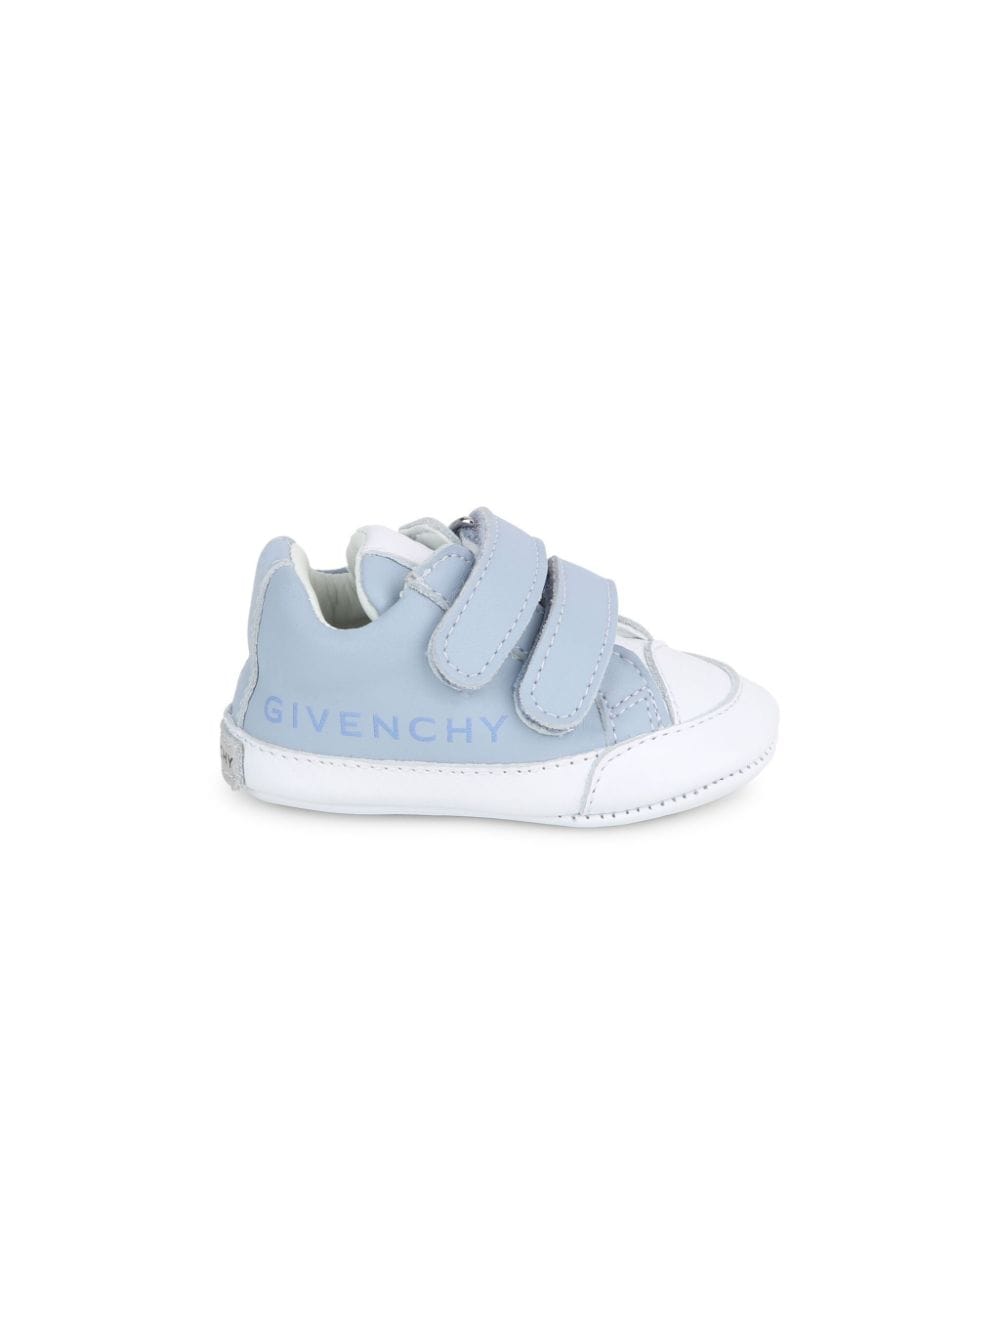 sneakers celeste neonato